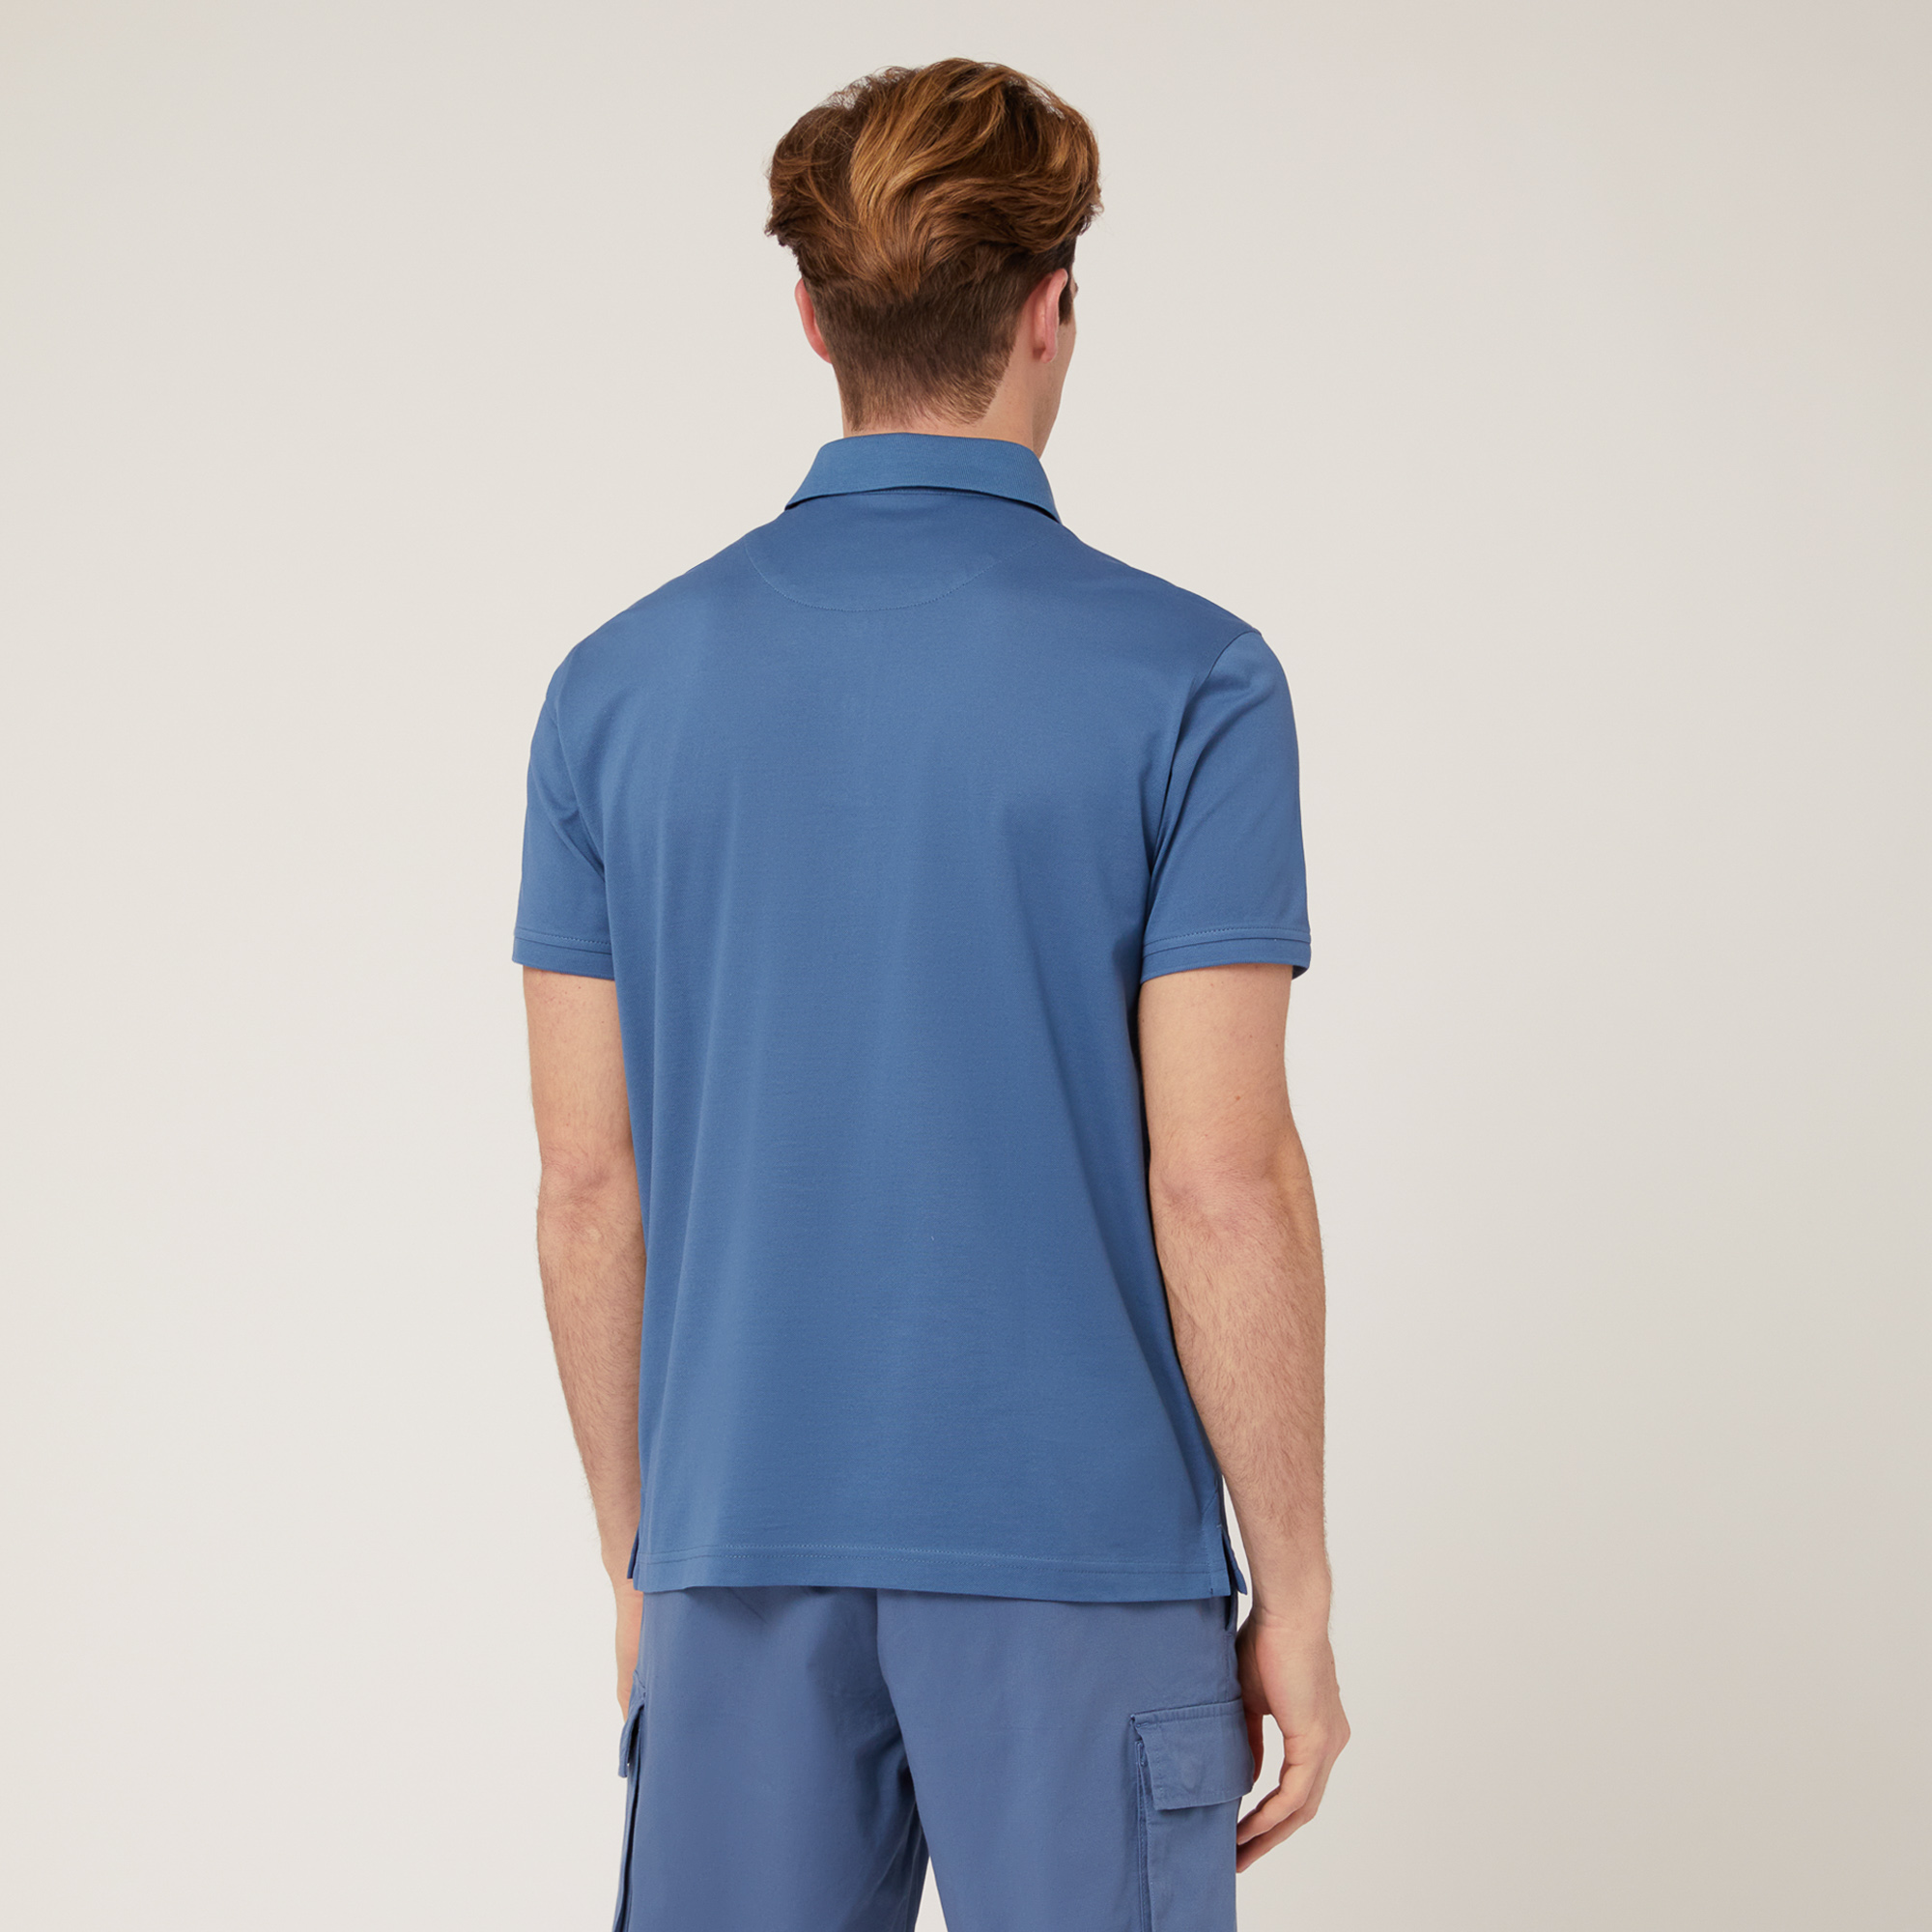 Poloshirt mit Print-Details, Blau, large image number 1